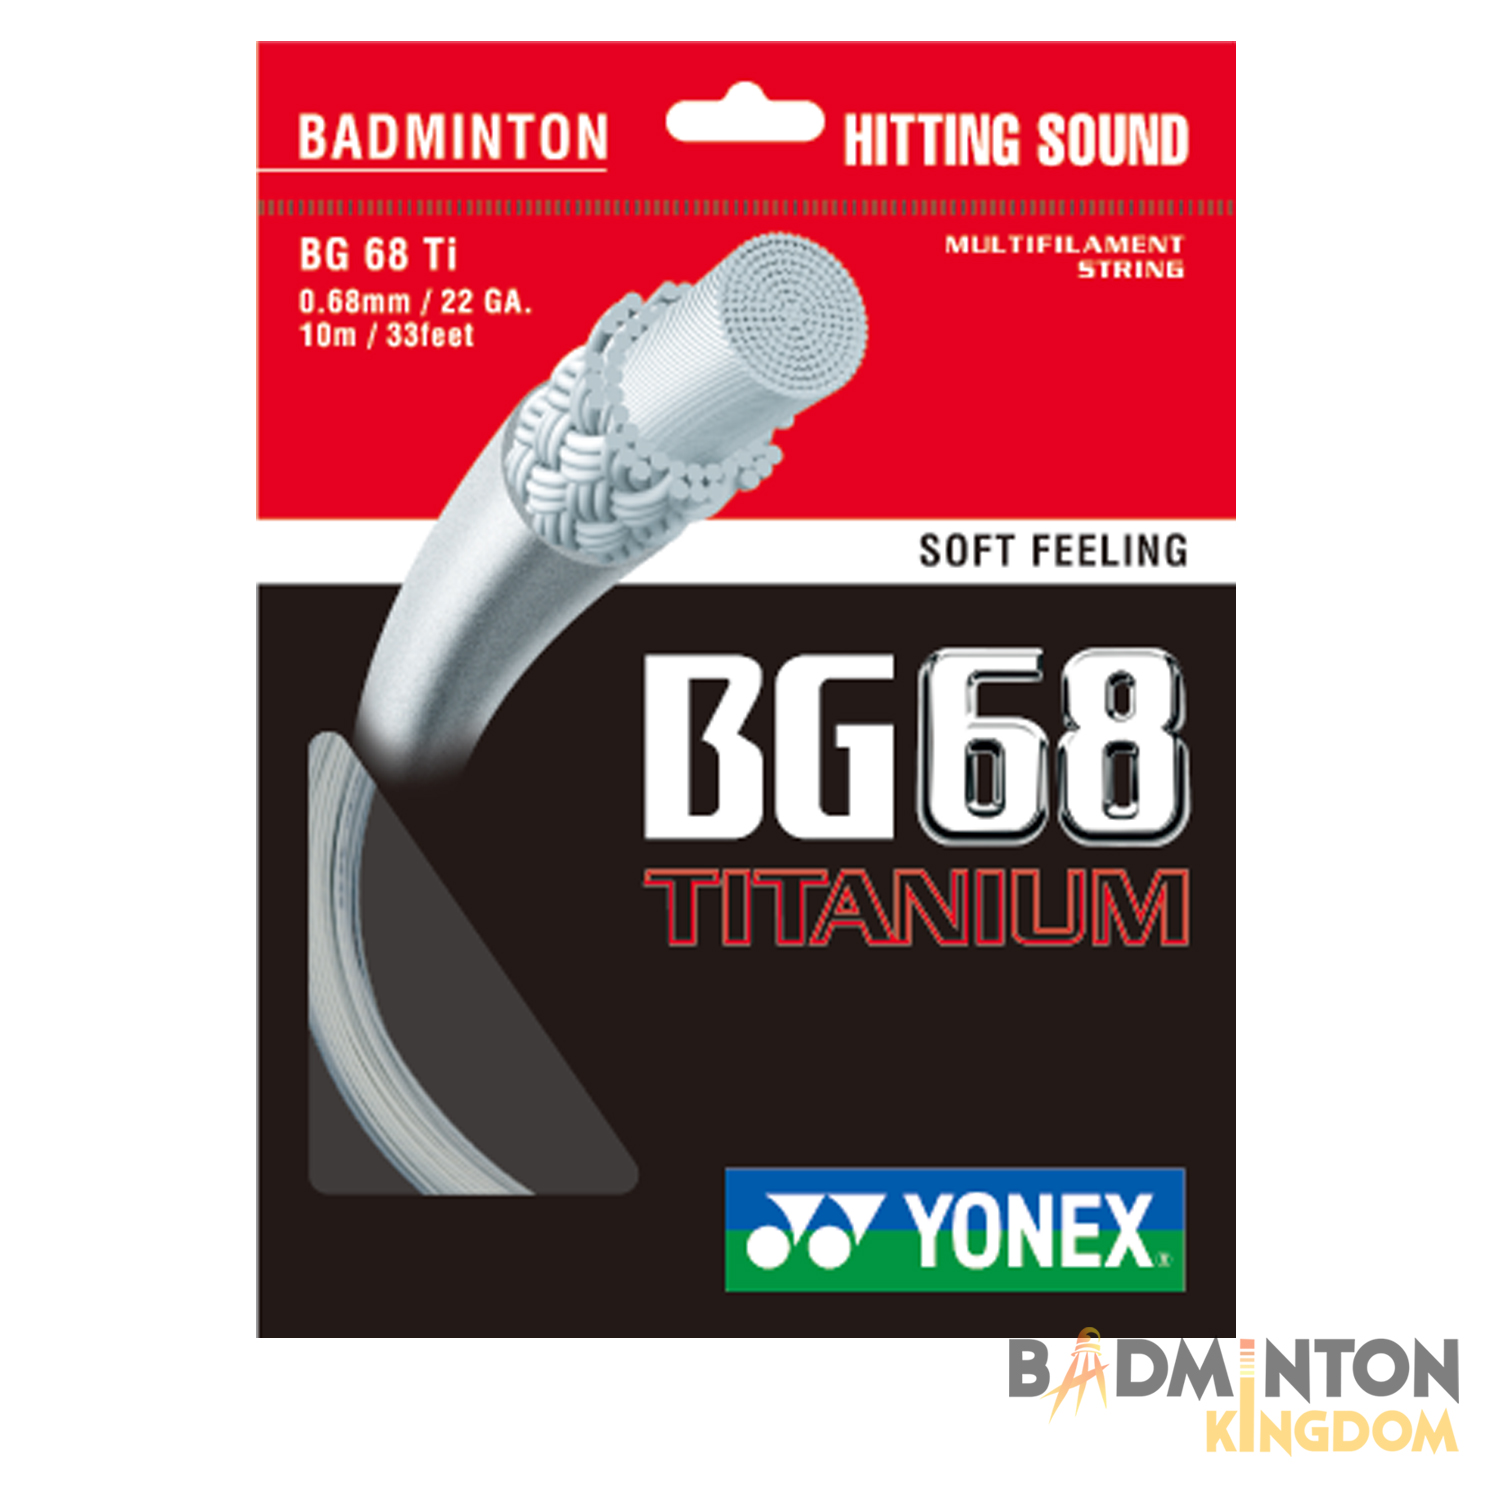 yonex-bg68-ti-badminton-string-single-set